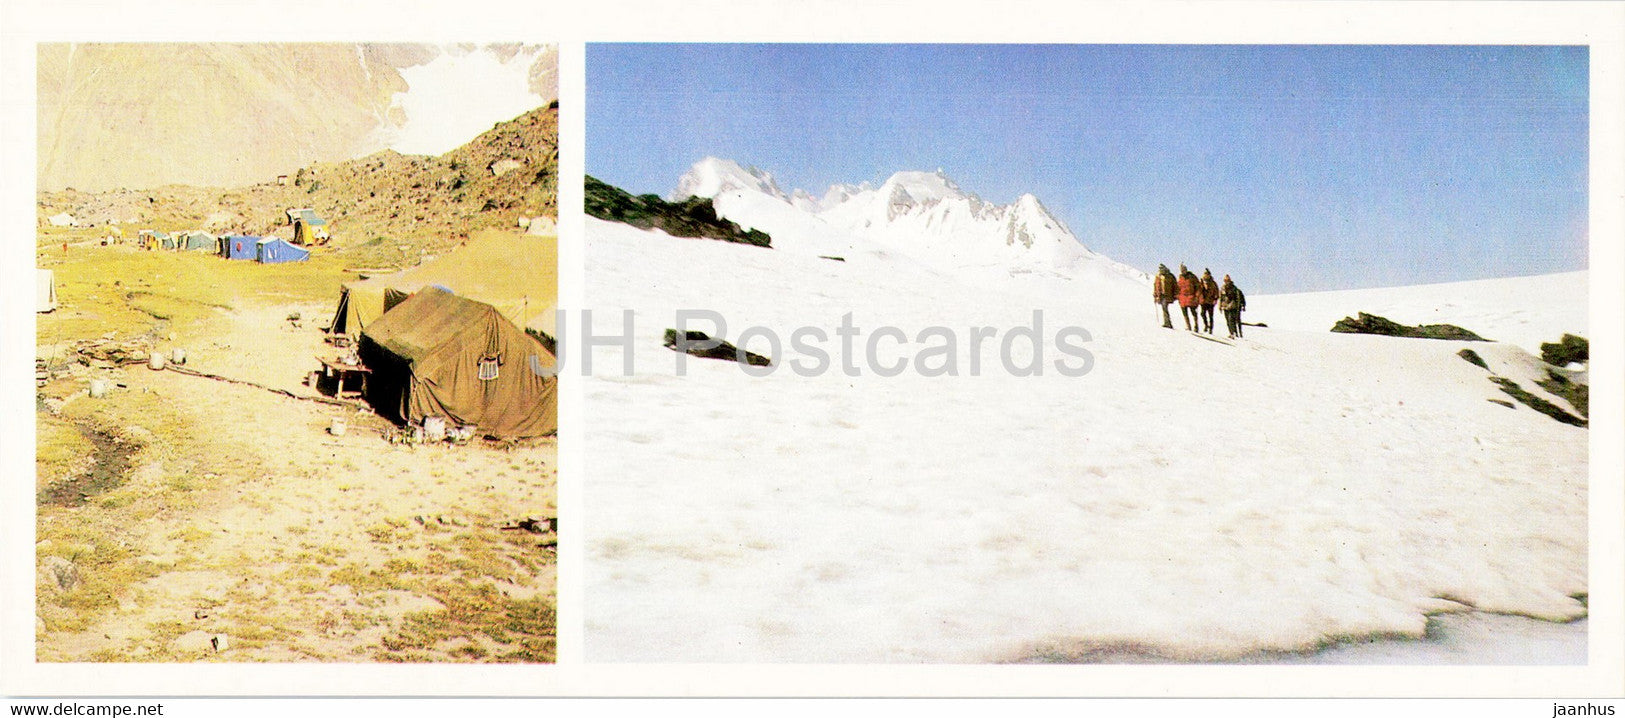 Pamir - Gorno-Badakhshan - international climbing camp at the foot of Communism peak - 1985 - Tajikistan USSR - unused - JH Postcards